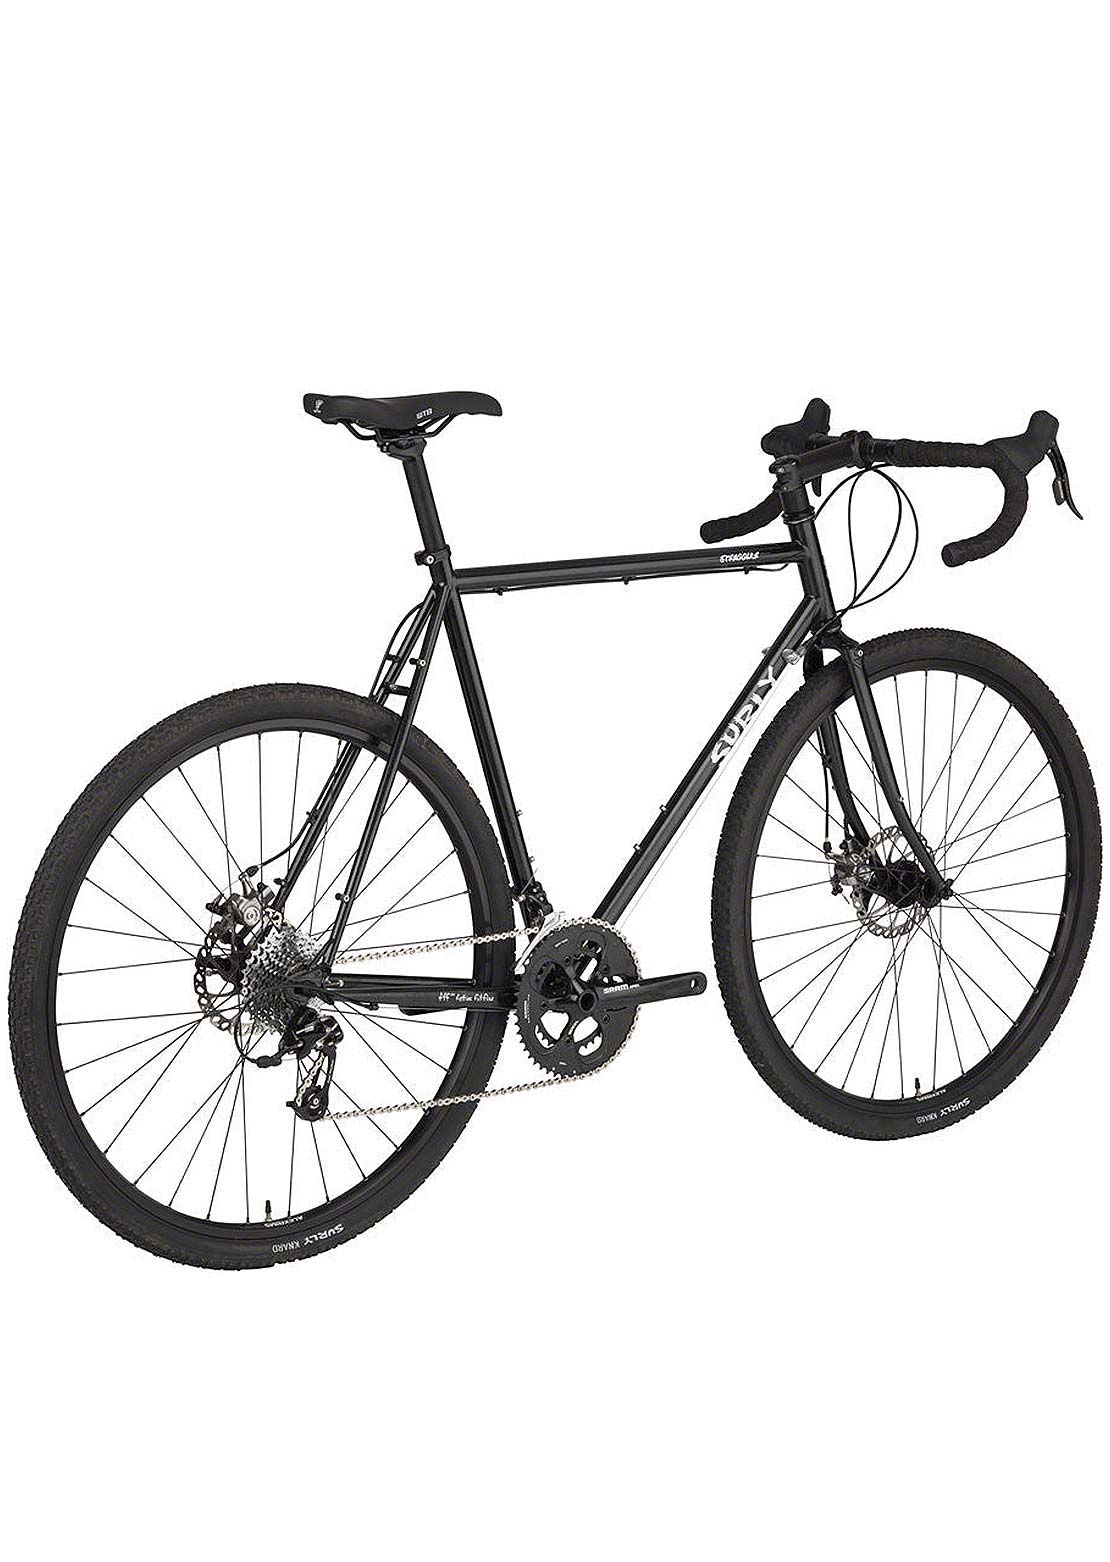 Surly Straggler Bike - 700C Black